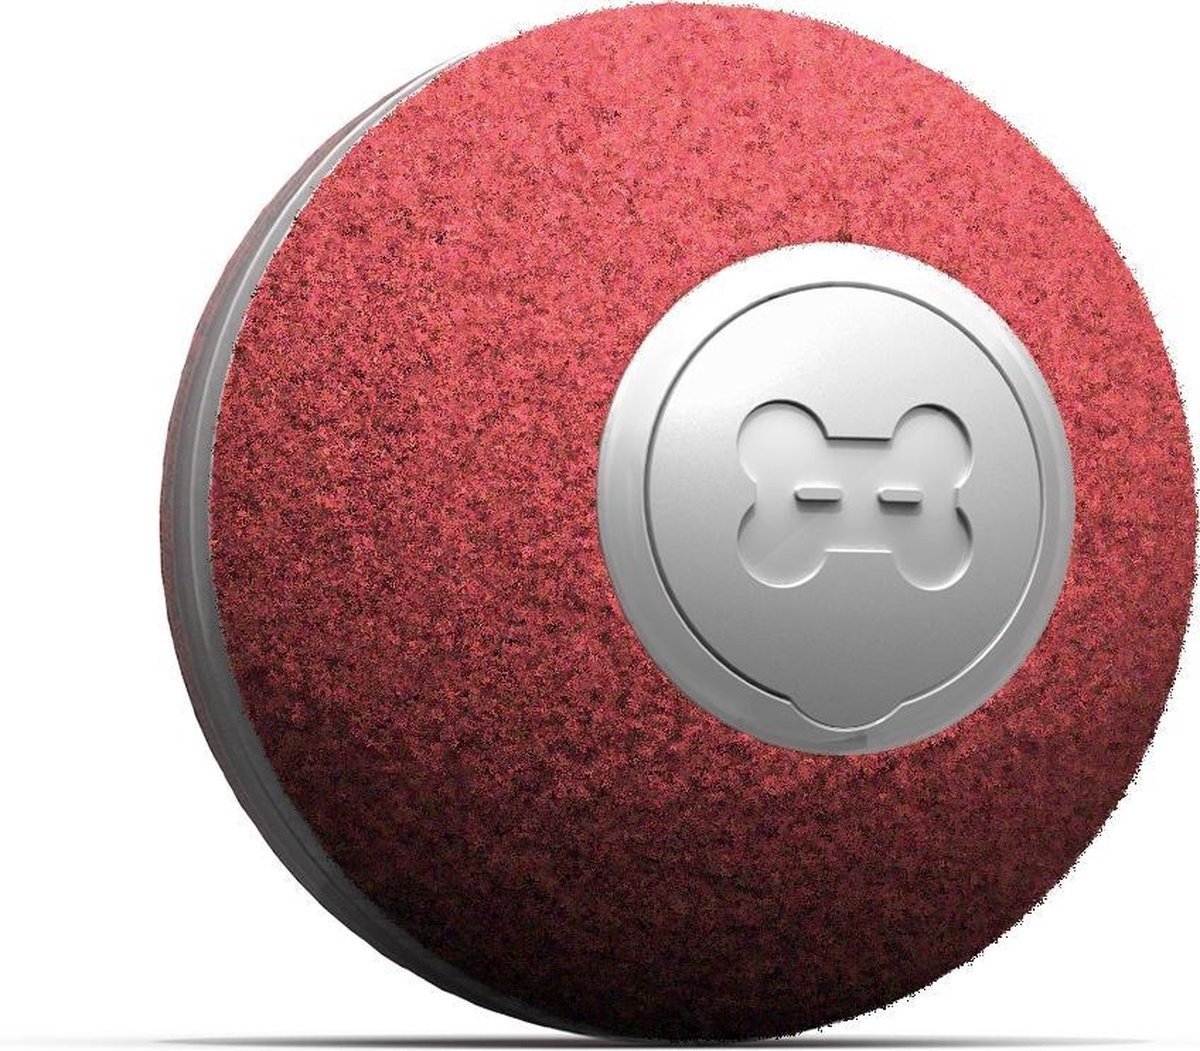 Mini Aktive günstig Kaufen-Cheerble mini ball 2.0 - Intelligenter interaktiver selbstrollender Ball für Katzen - 3 Spielmodi - Katzenspielzeug - USB aufladbar - Rot. Cheerble mini ball 2.0 - Intelligenter interaktiver selbstrollender Ball für Katzen - 3 Spielmodi - Katzen